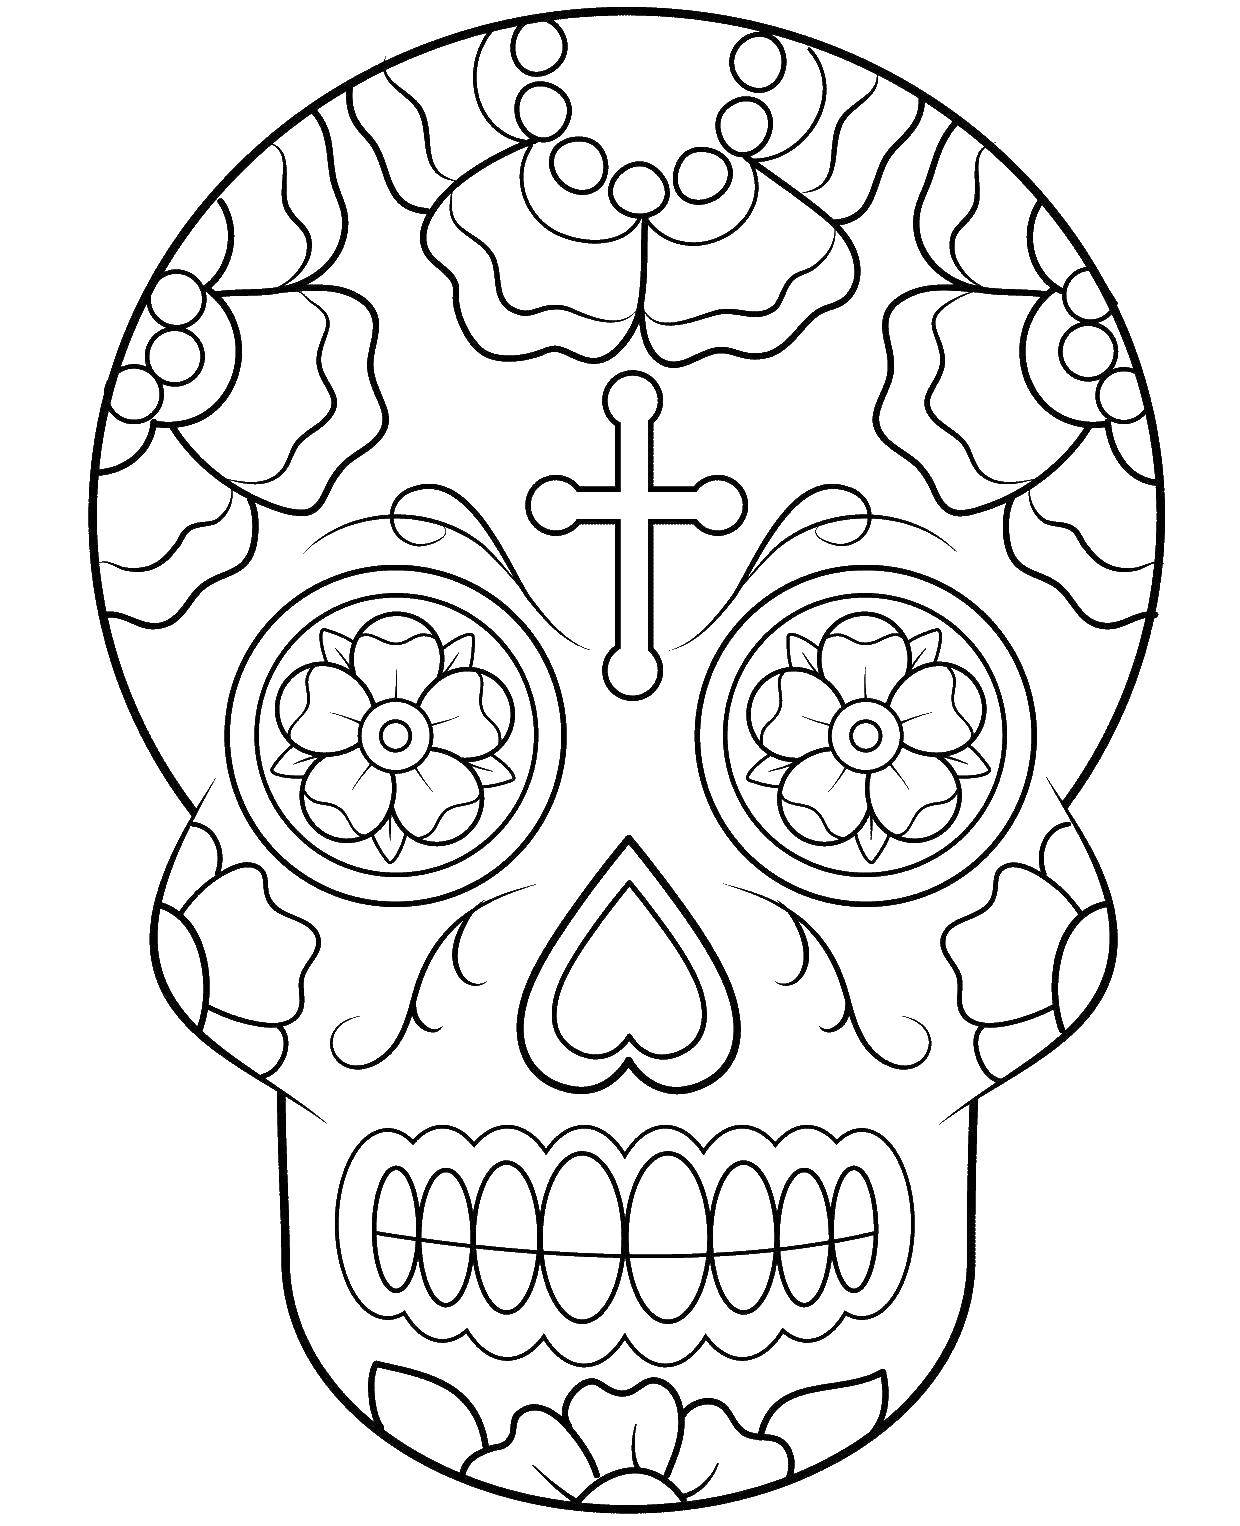 Coloring The skull patterns. Category Skull. Tags:  skull, patterns, flowers.